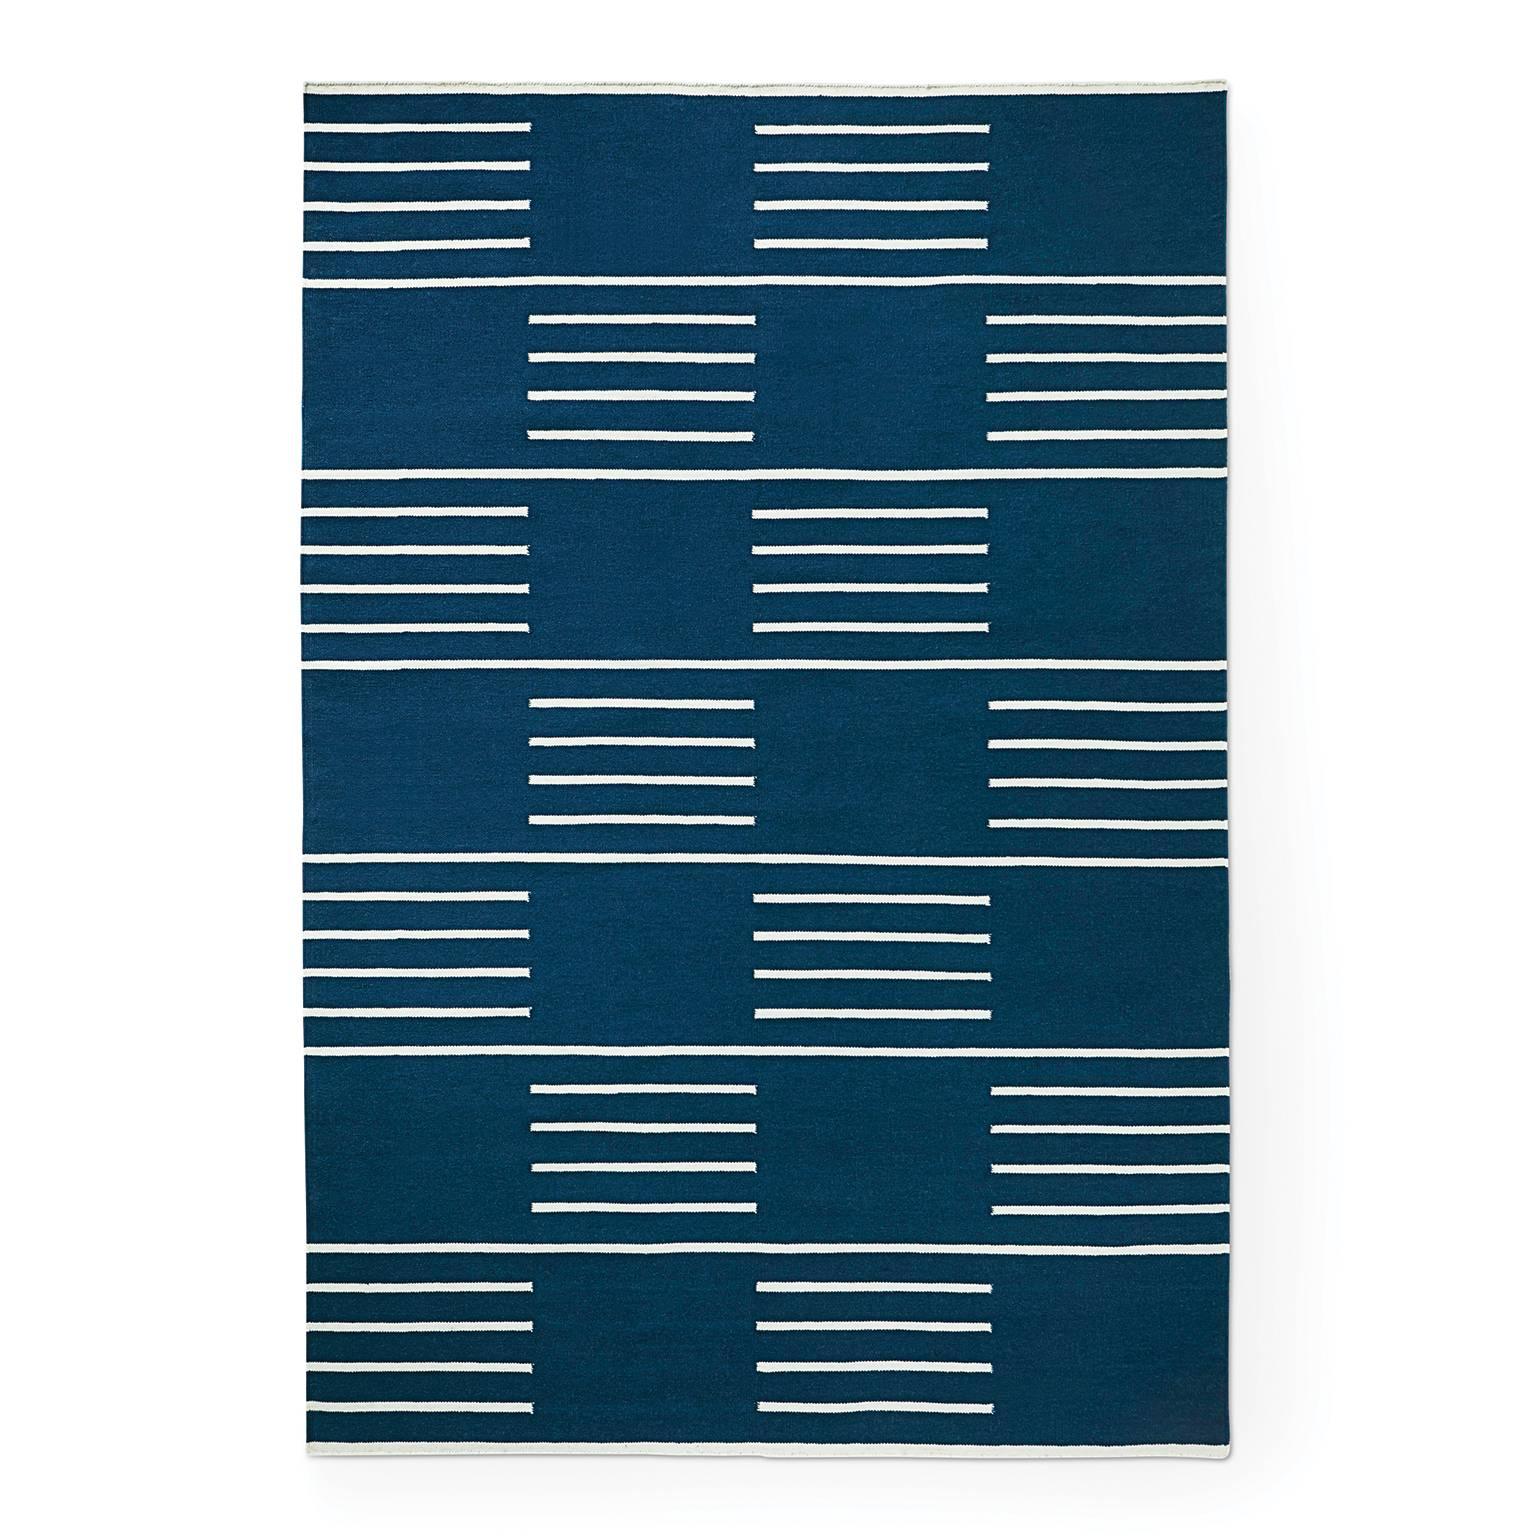 Klassischer blauer/cremefarbener, moderner Dhurrie/Kelim-Teppich in skandinavischem Design